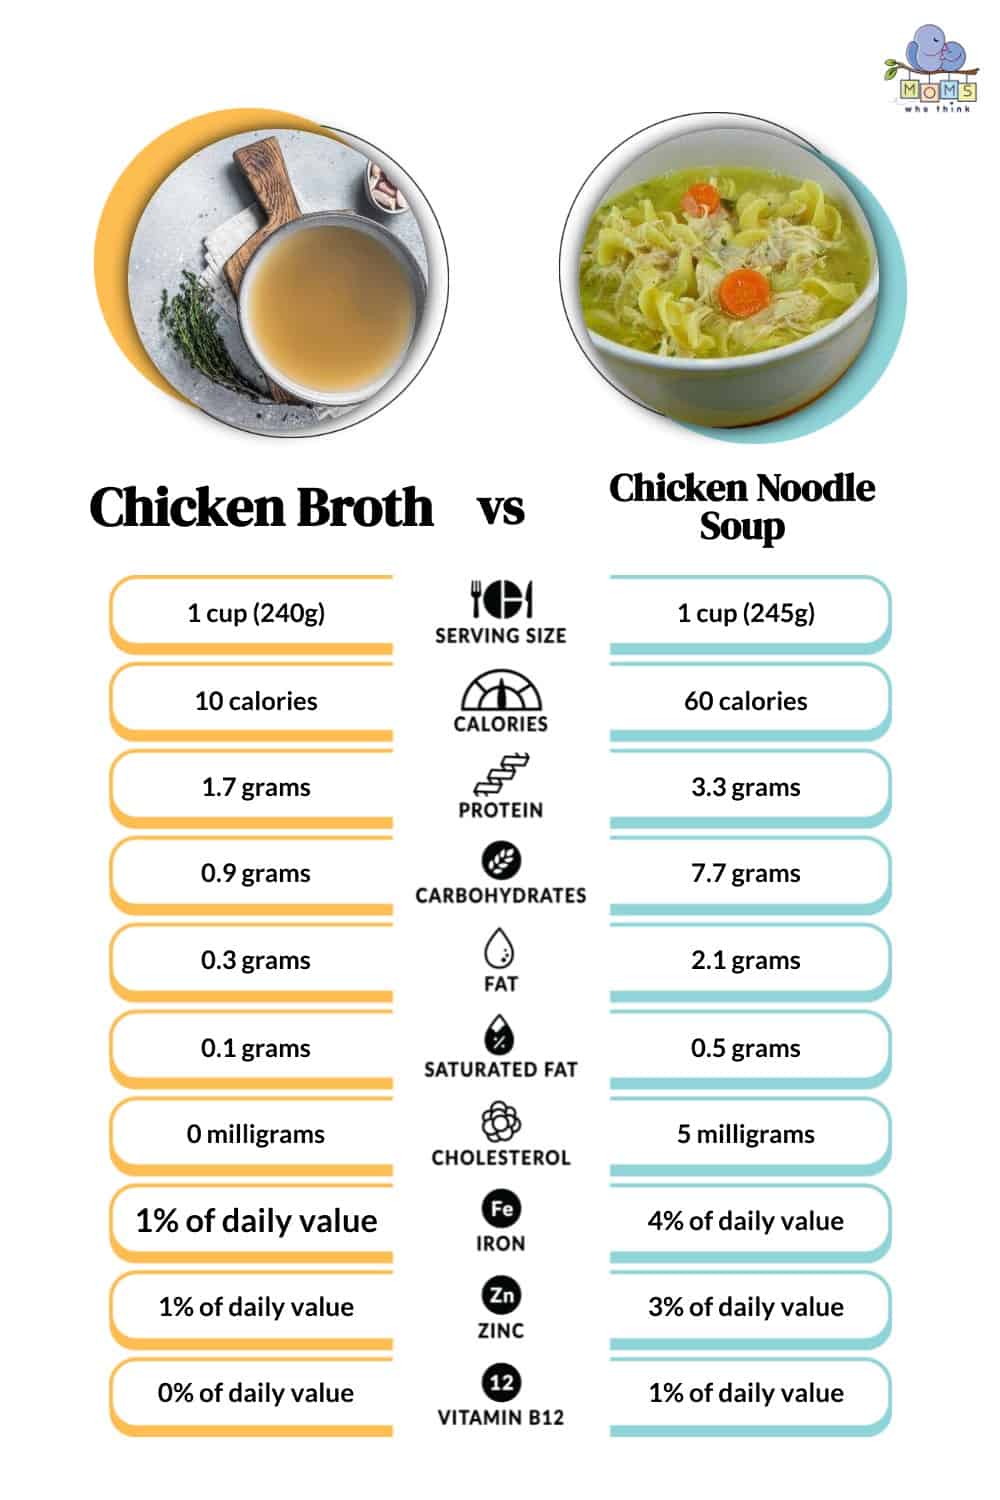 Chicken Broth vs Chicken Noodle Soup Calories